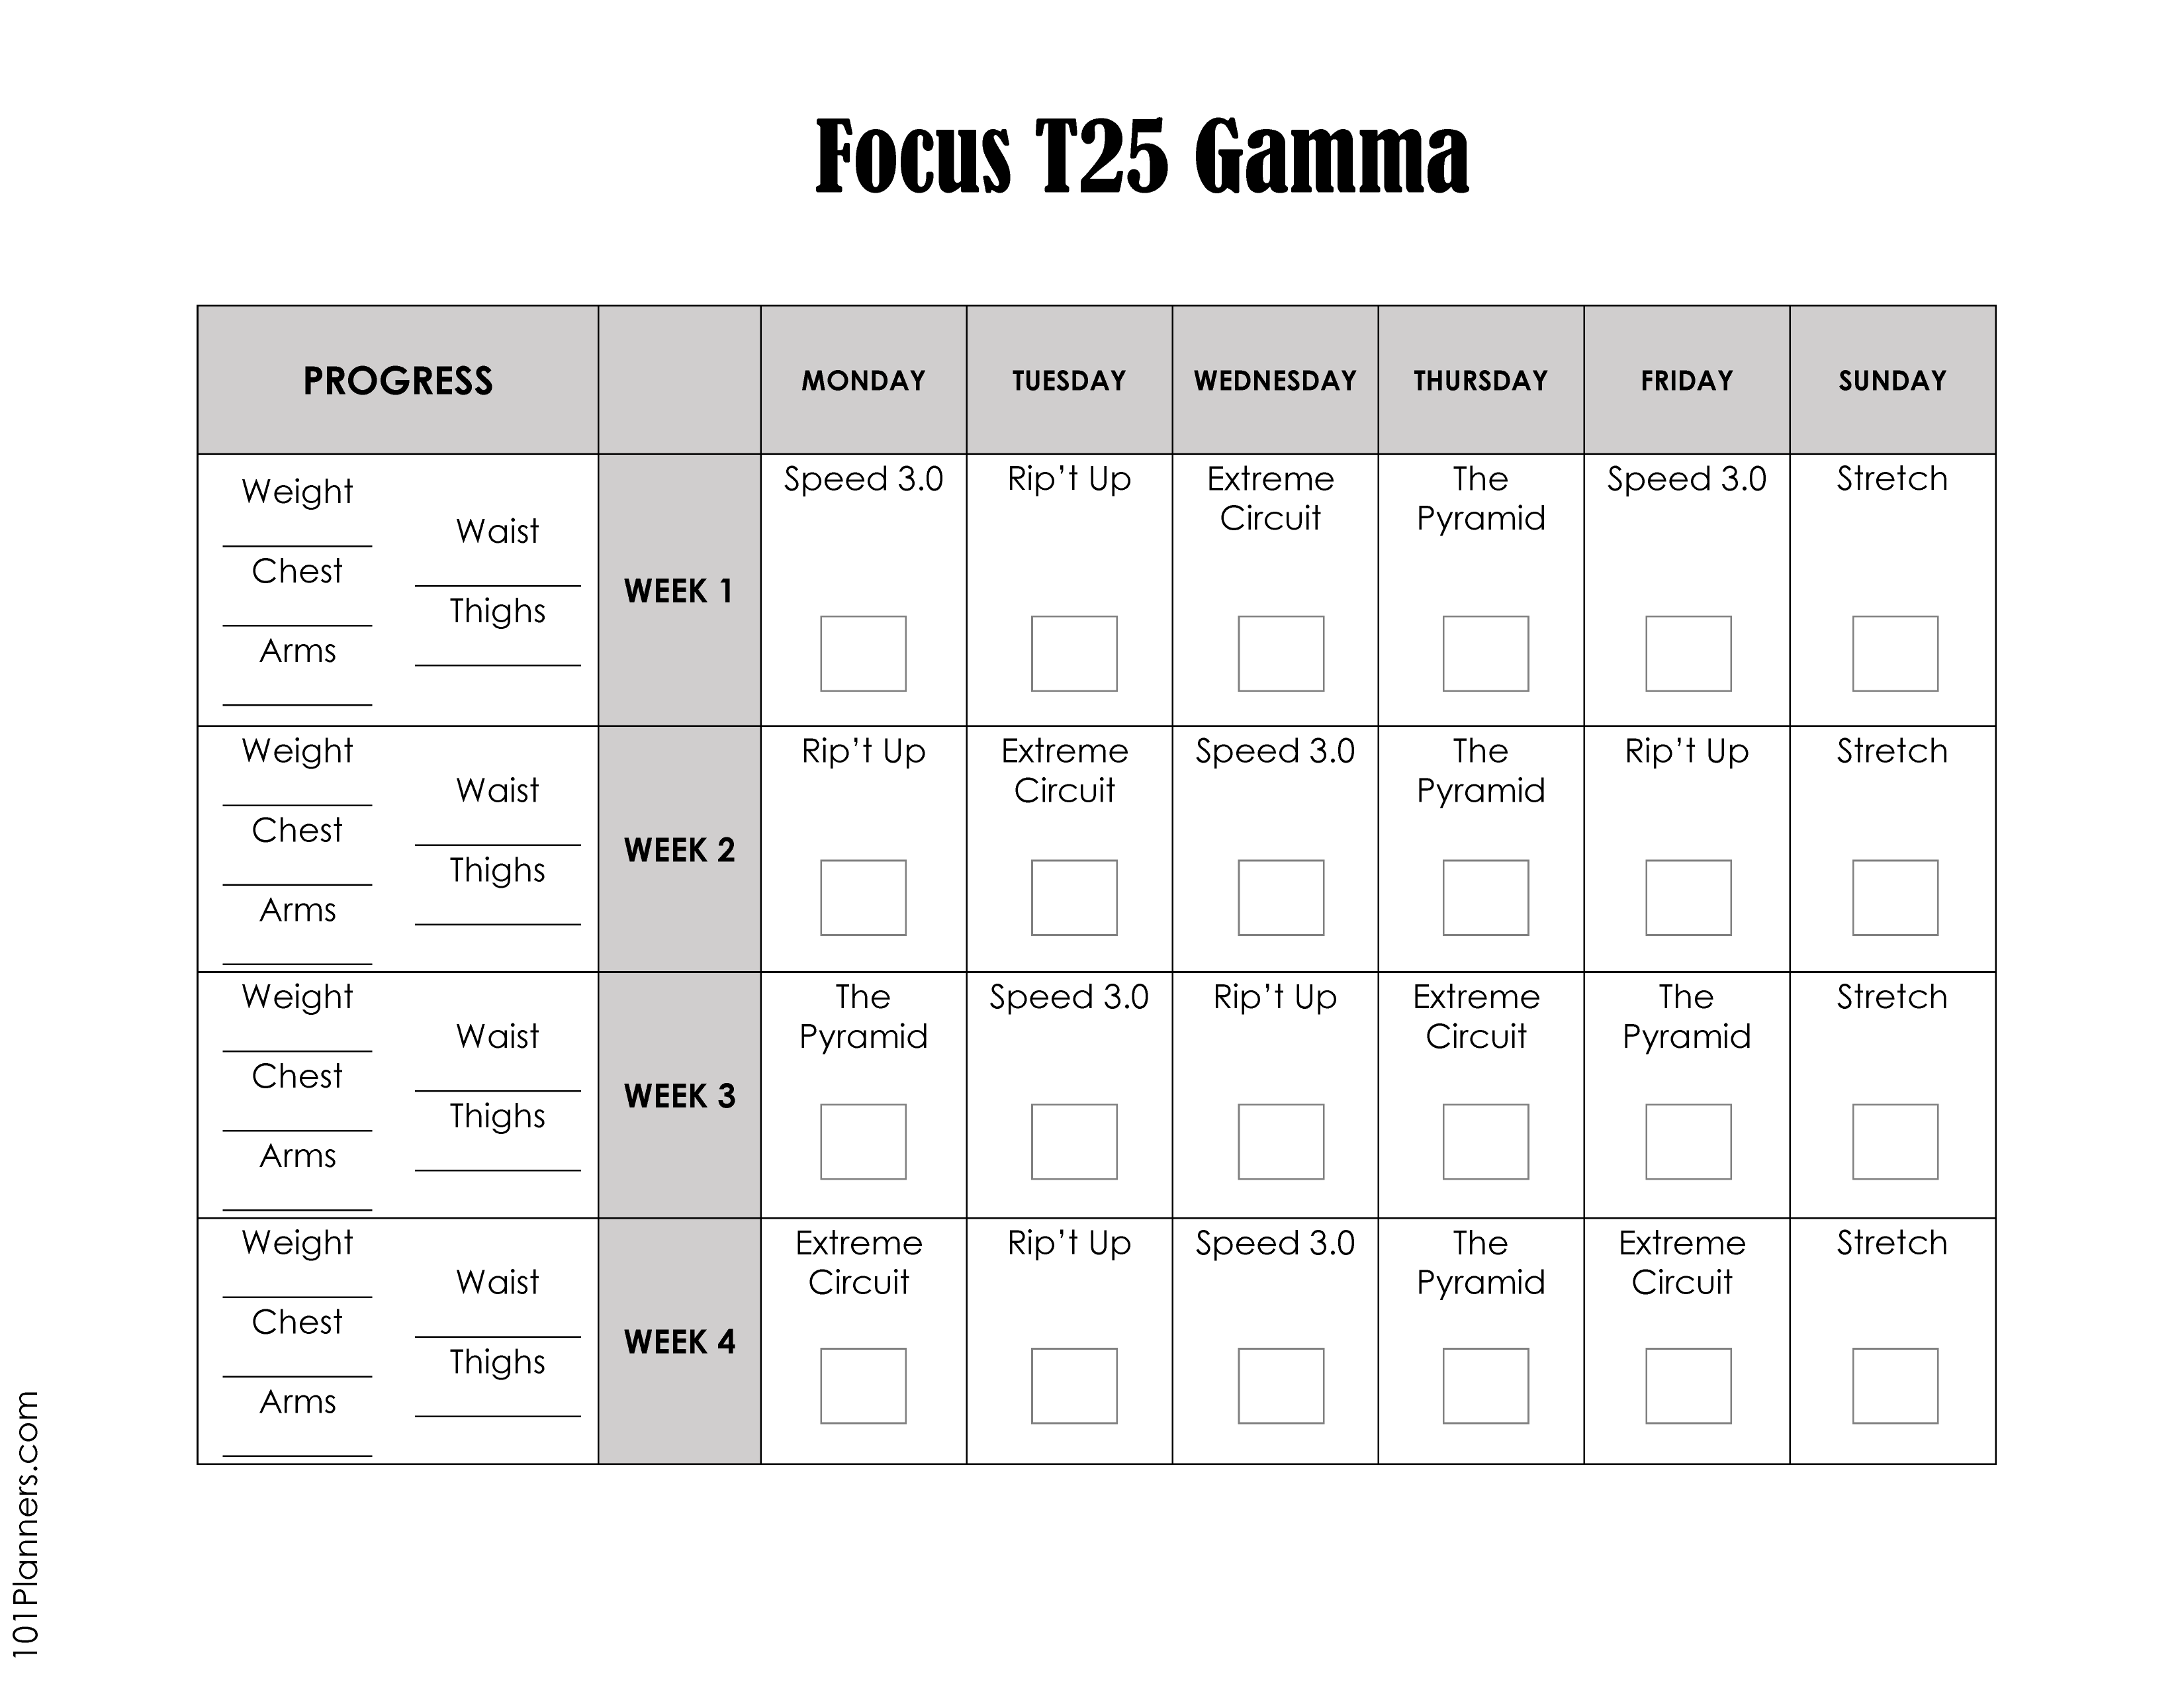 Free Printable Focus T25 Calendar (Alpha, Beta & Gamma)